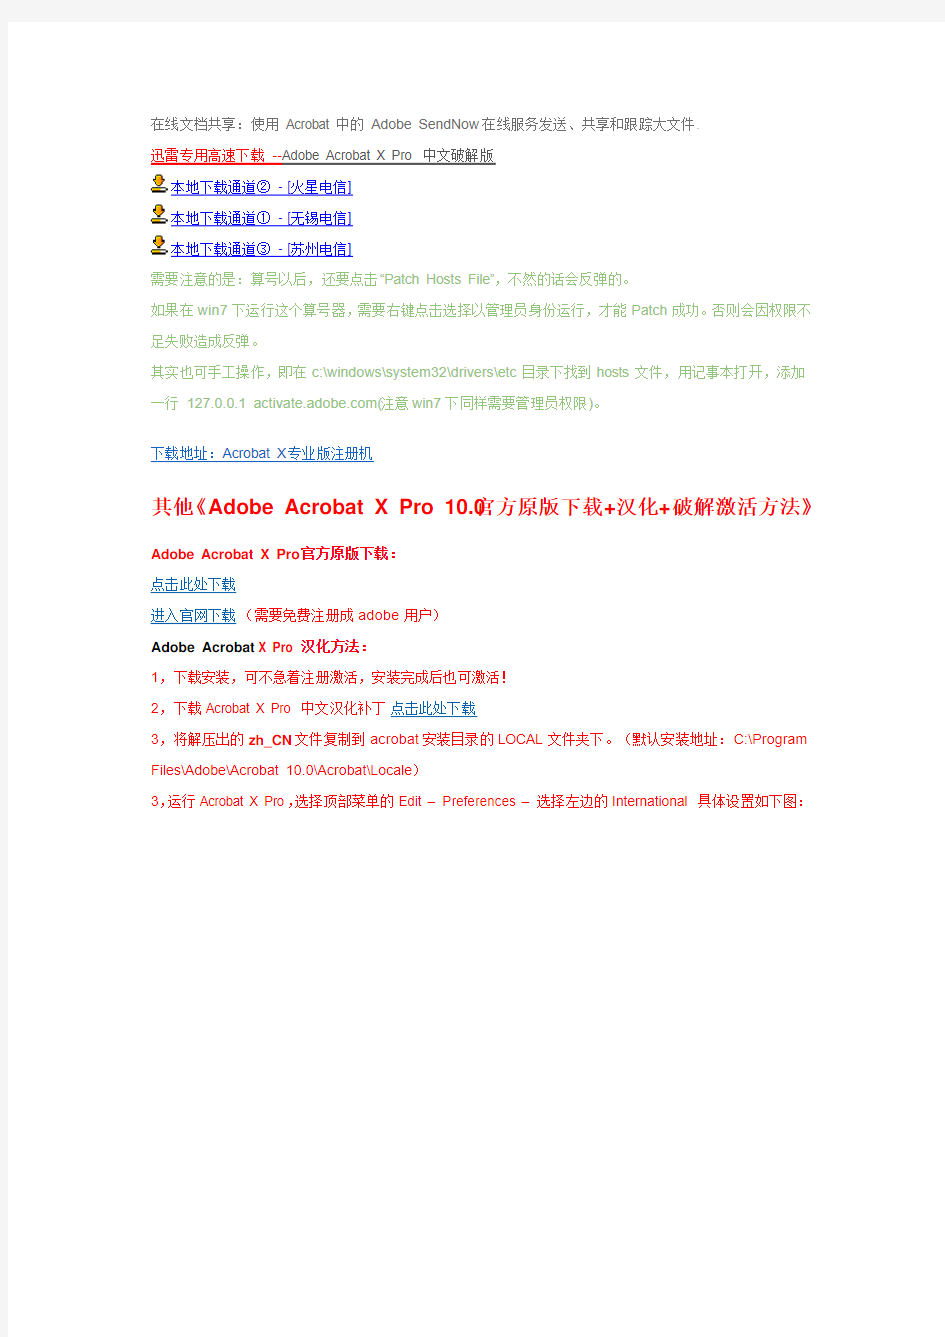 Adobe Acrobat X Pro 中文破解版(Acrobat Pro 10.0)